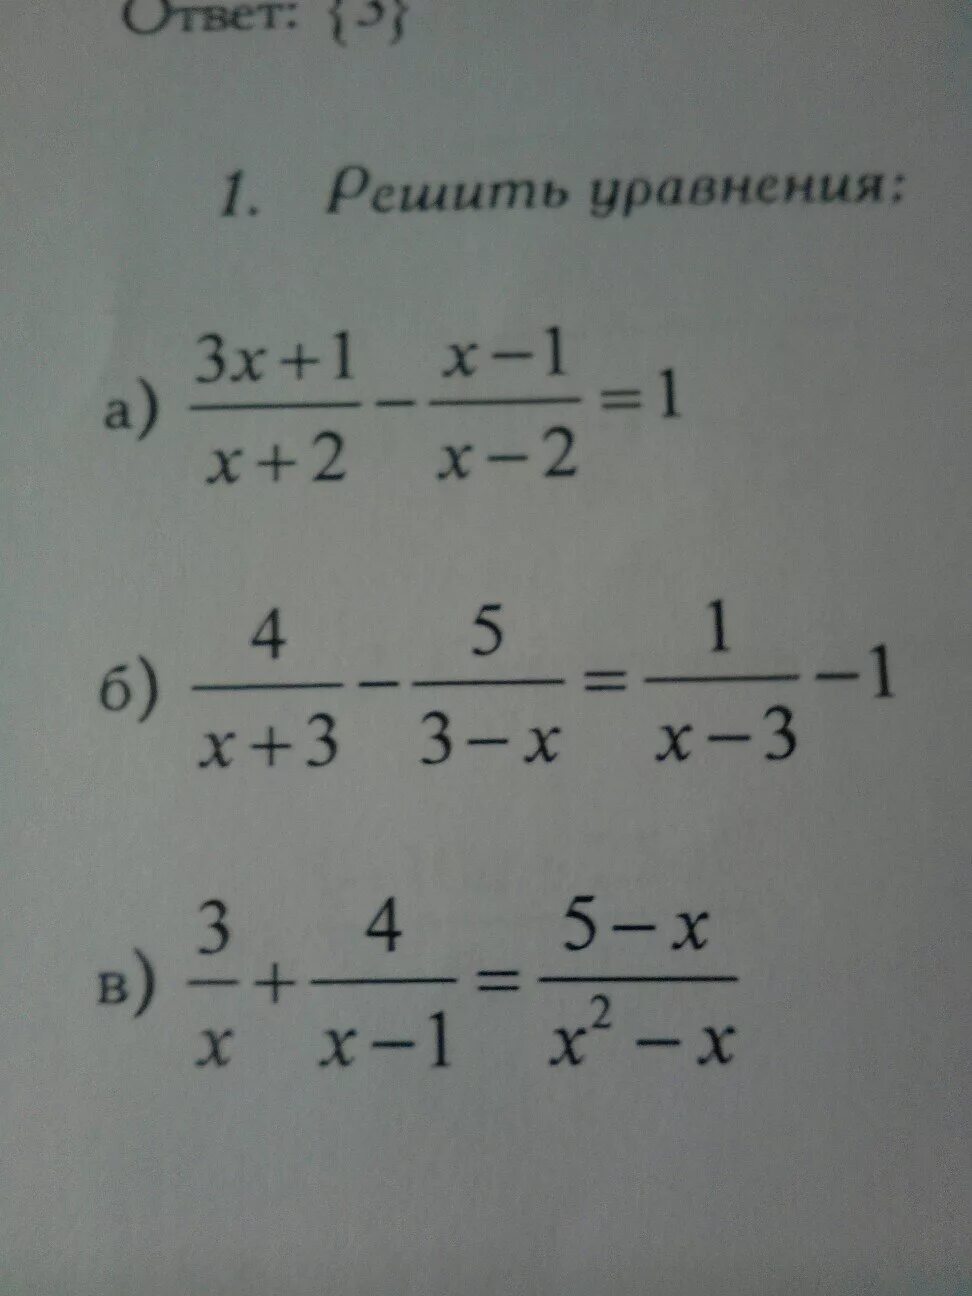 X 1.3 1.2. X1+2x2+3x3. 3x+1. X-1/2=4+5x/3. 3x-1=1.